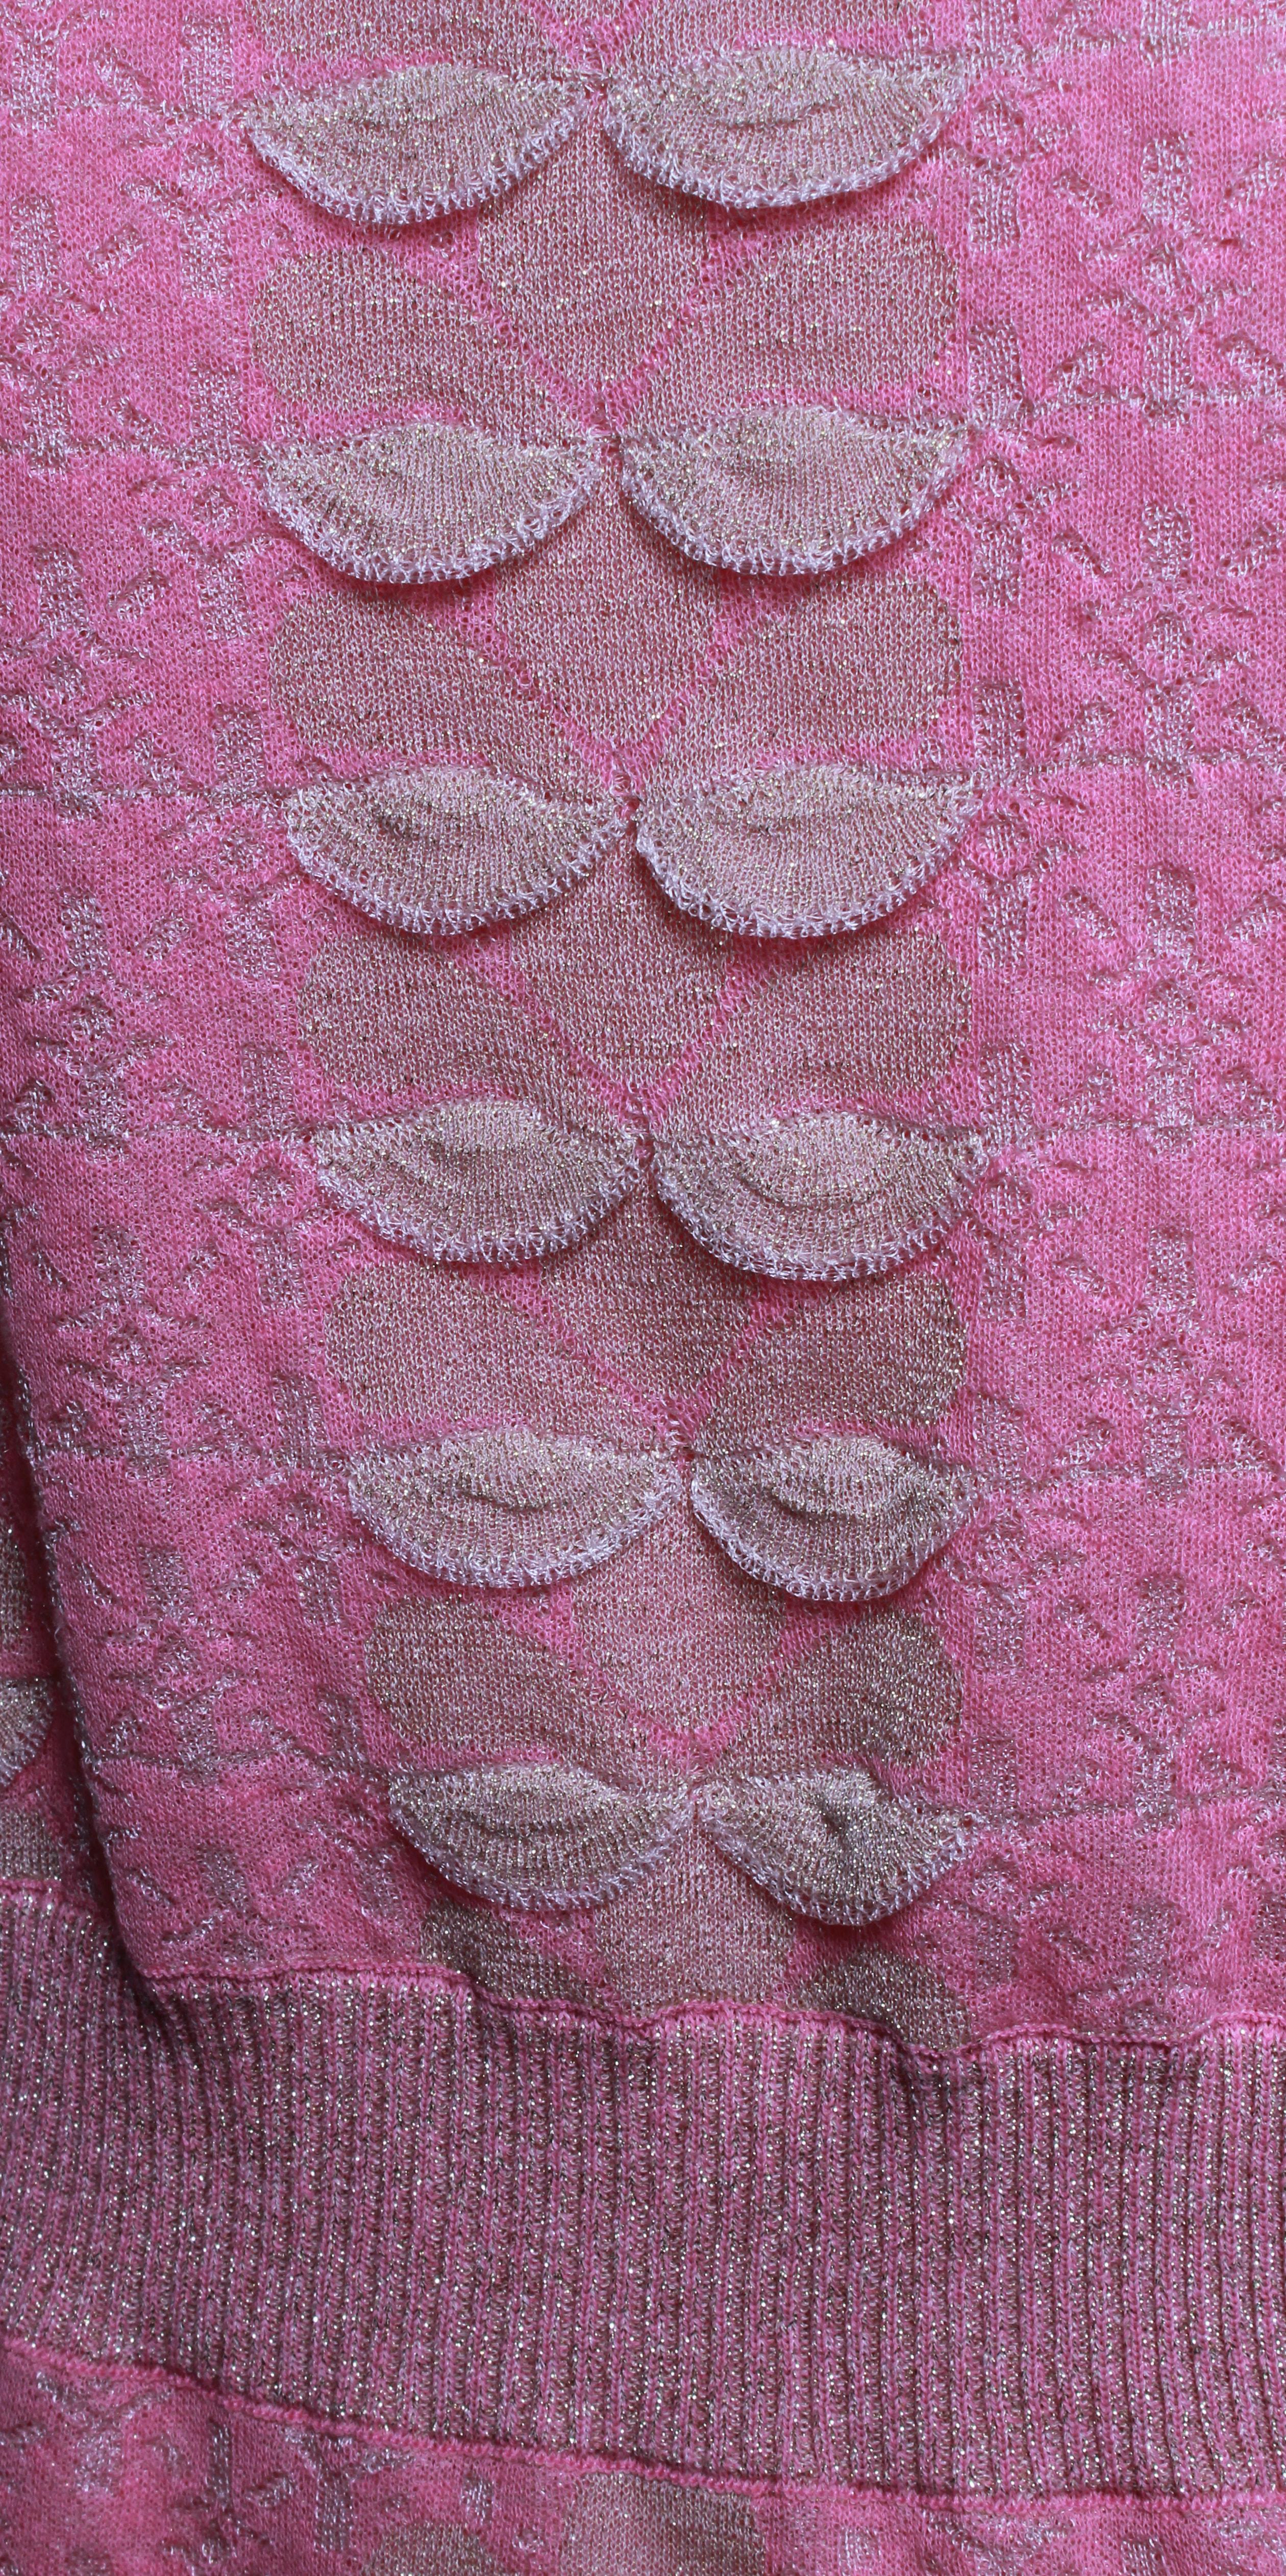 Women's or Men's CHANEL 2016 Pink and Metallic Knit Mini Dress